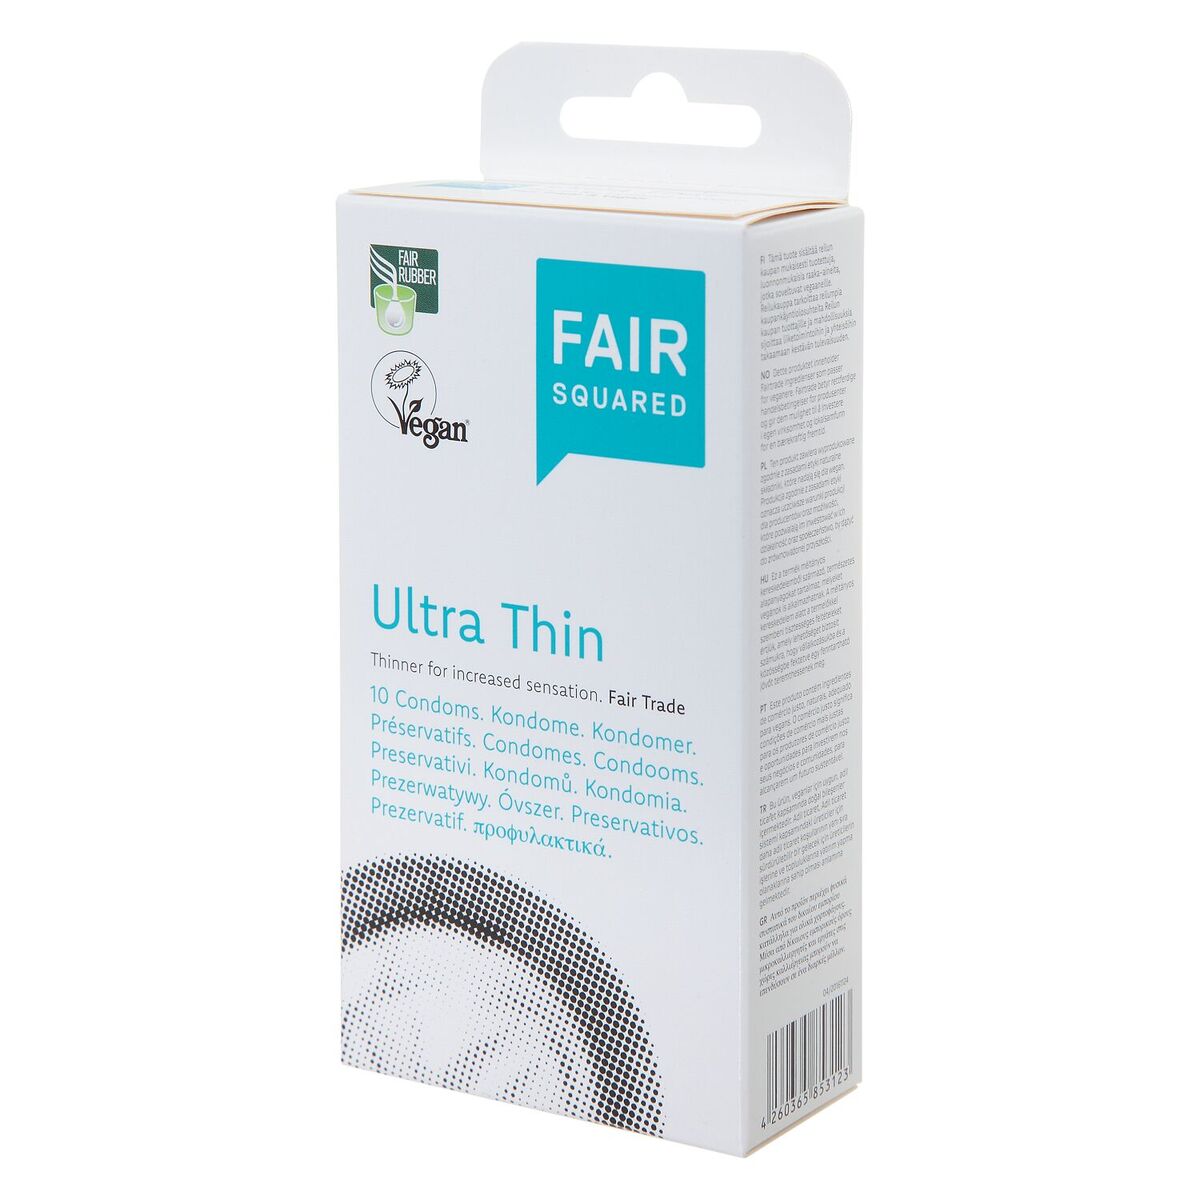 Billede af FAIR SQUARED - Ultra Thin Kondom hos Organic Beauty Supply